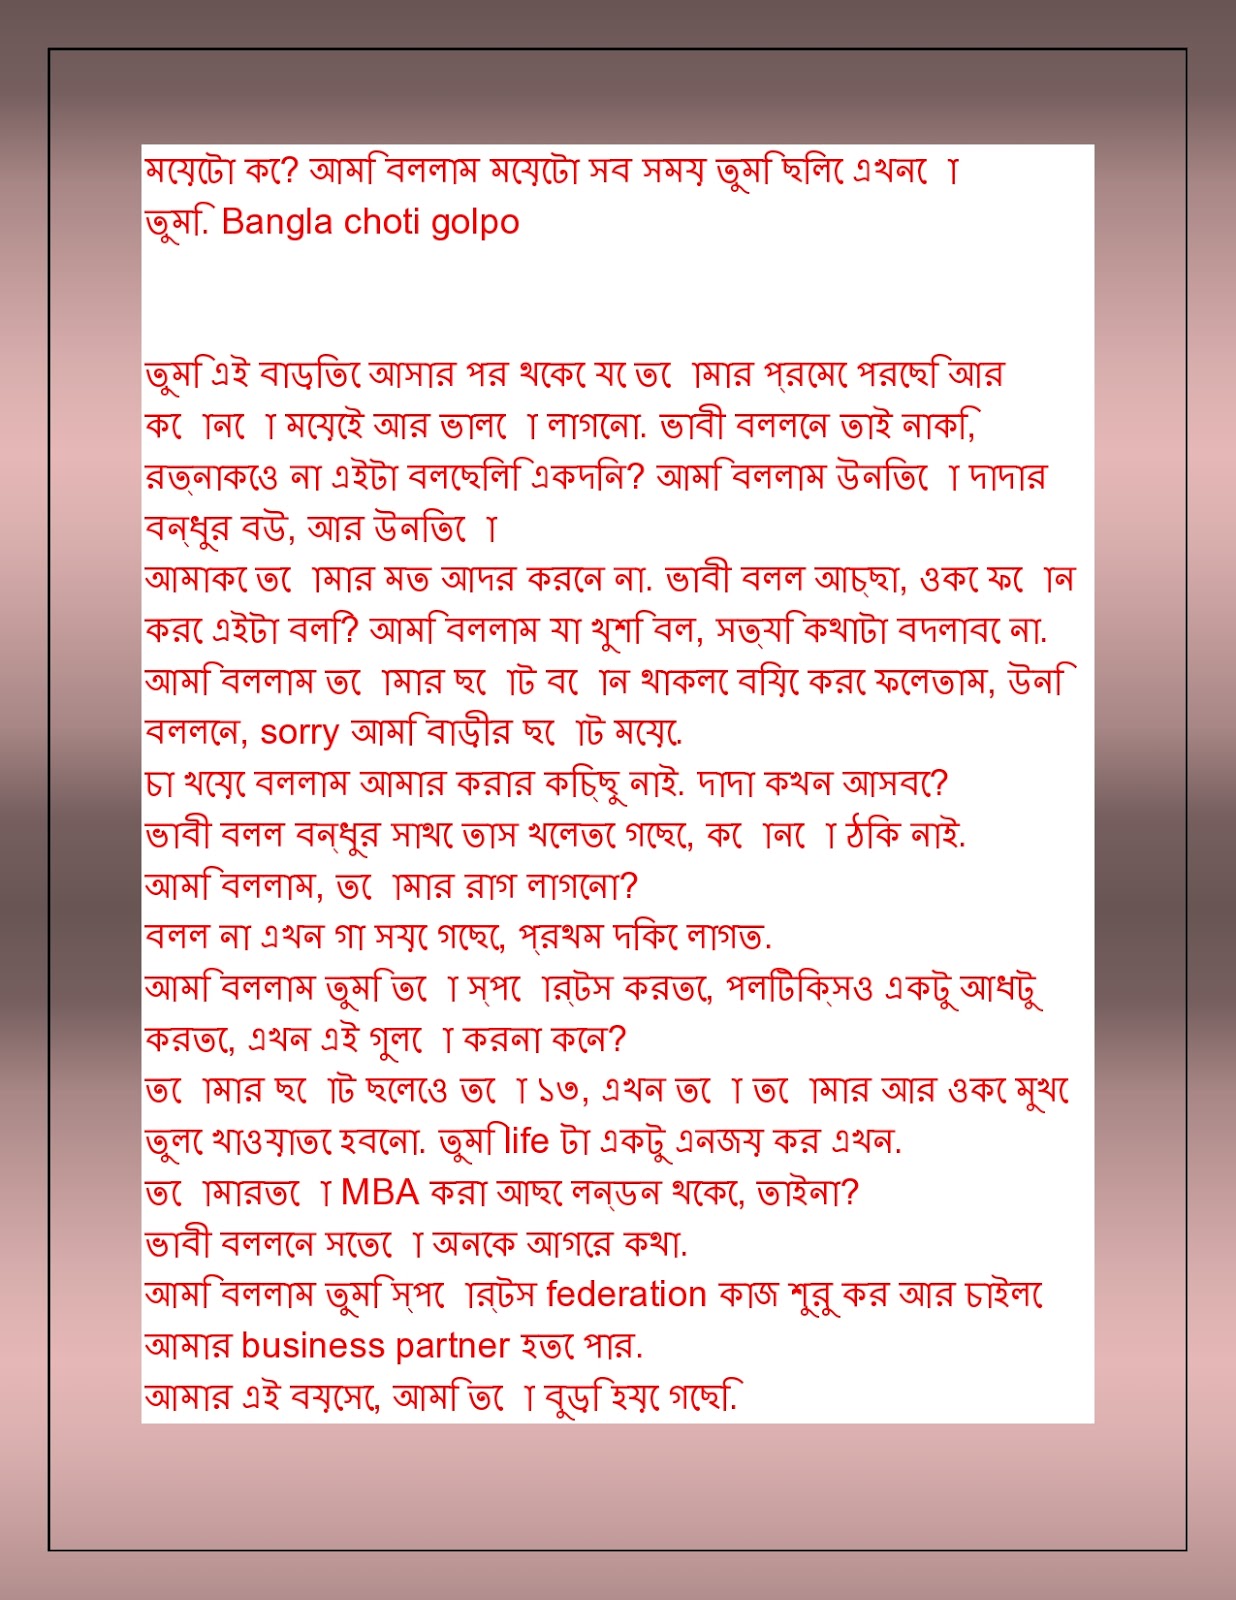 Bangla Chodan - Bangla bhabi chodar golpo.